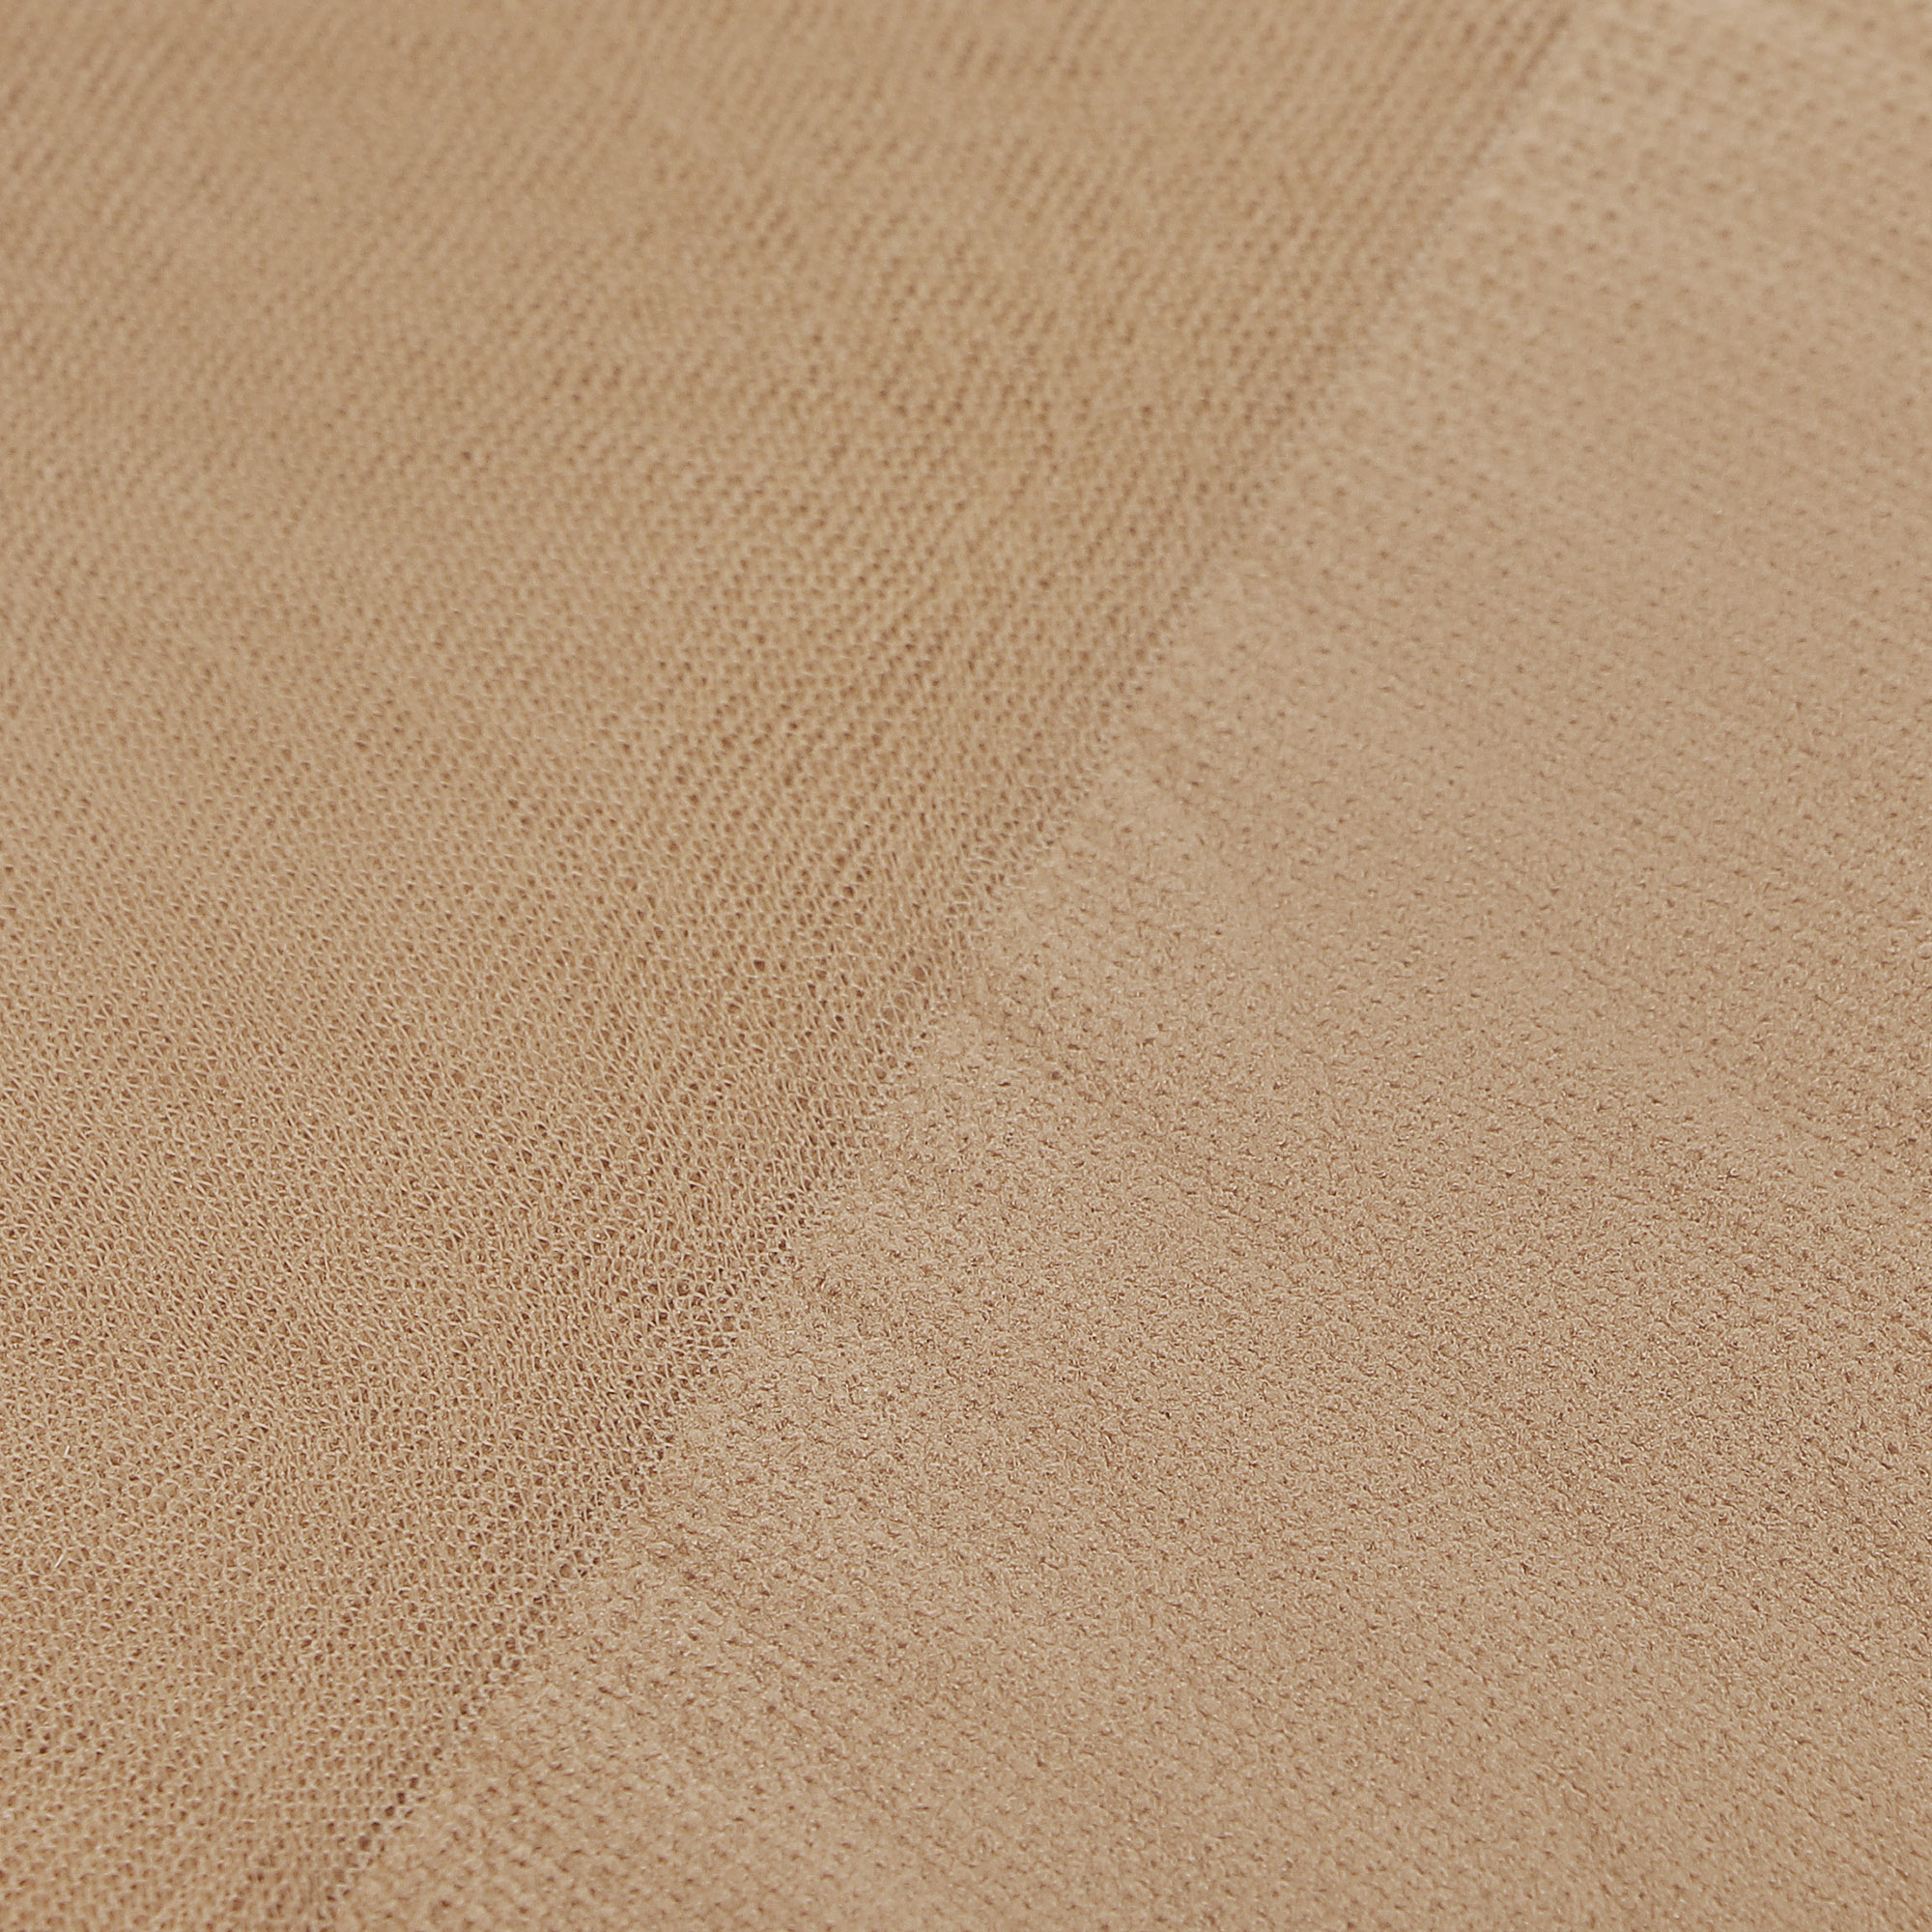 Колготки Sanpellegrino Support 20 Comfort Nudo S/M, цвет светло-бежевый, размер 1/2 - фото 2